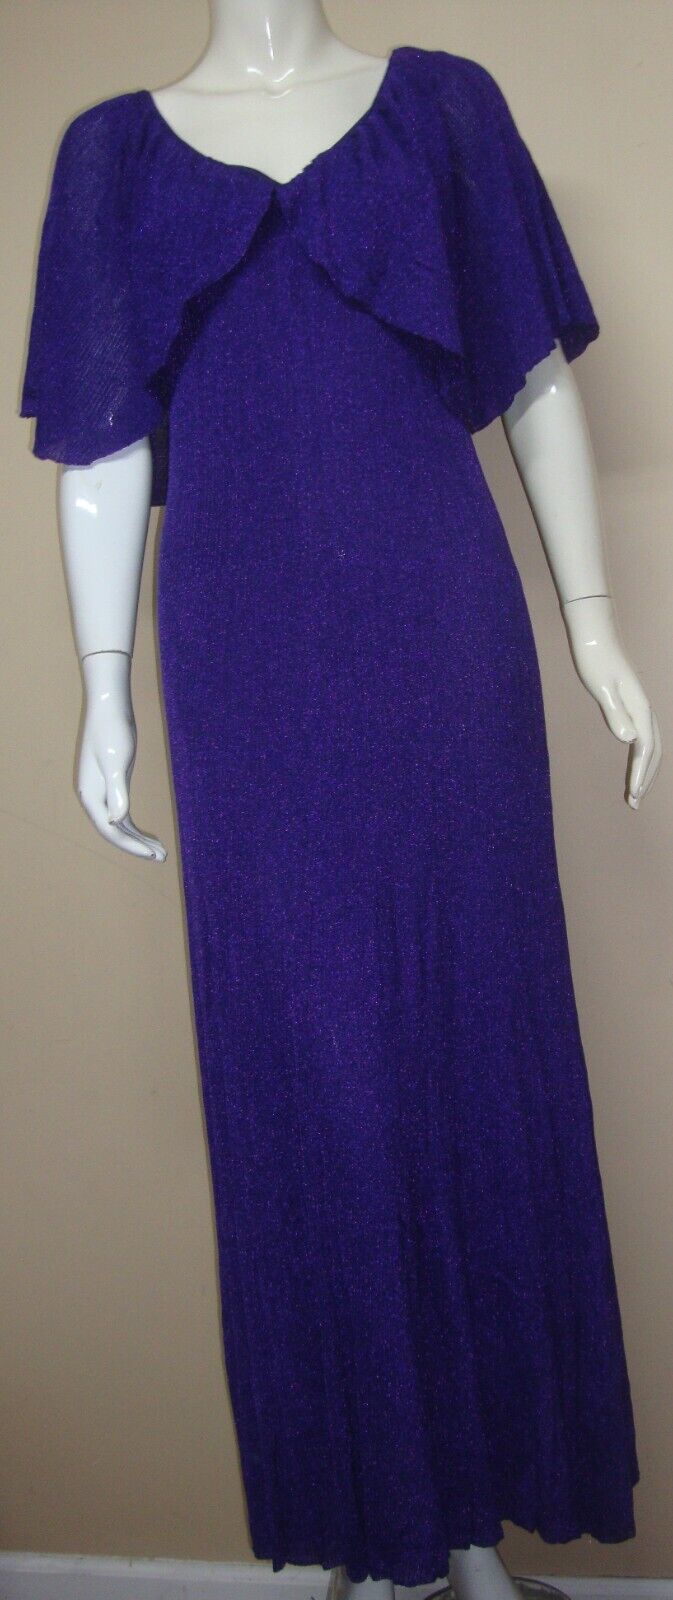 Primary image for Zara Purple Metallic Thread Cape Long Knit Maxi Dress Size SMALL NEW 3859/100